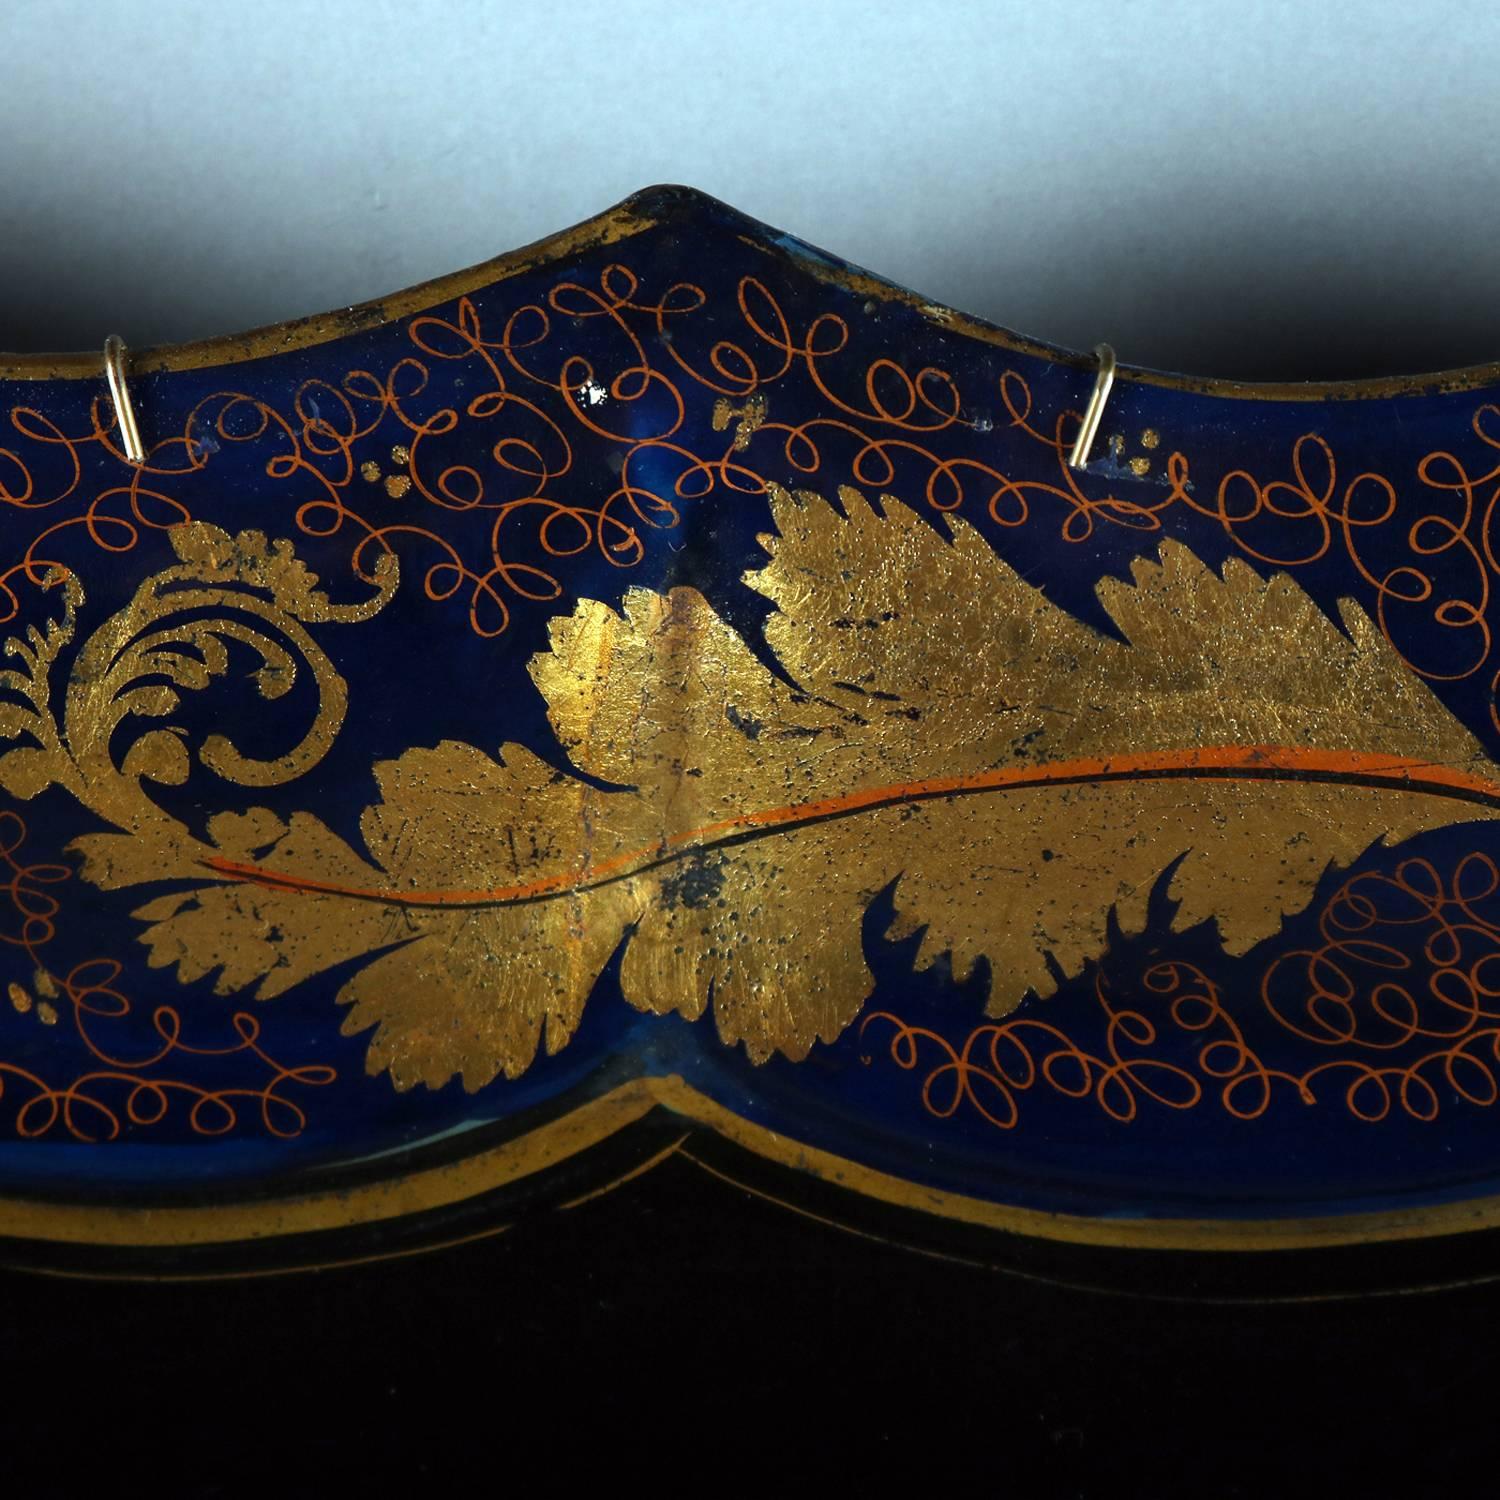 Ebonized Antique Gilt Decorated Toleware Serving Tray, 19th Century